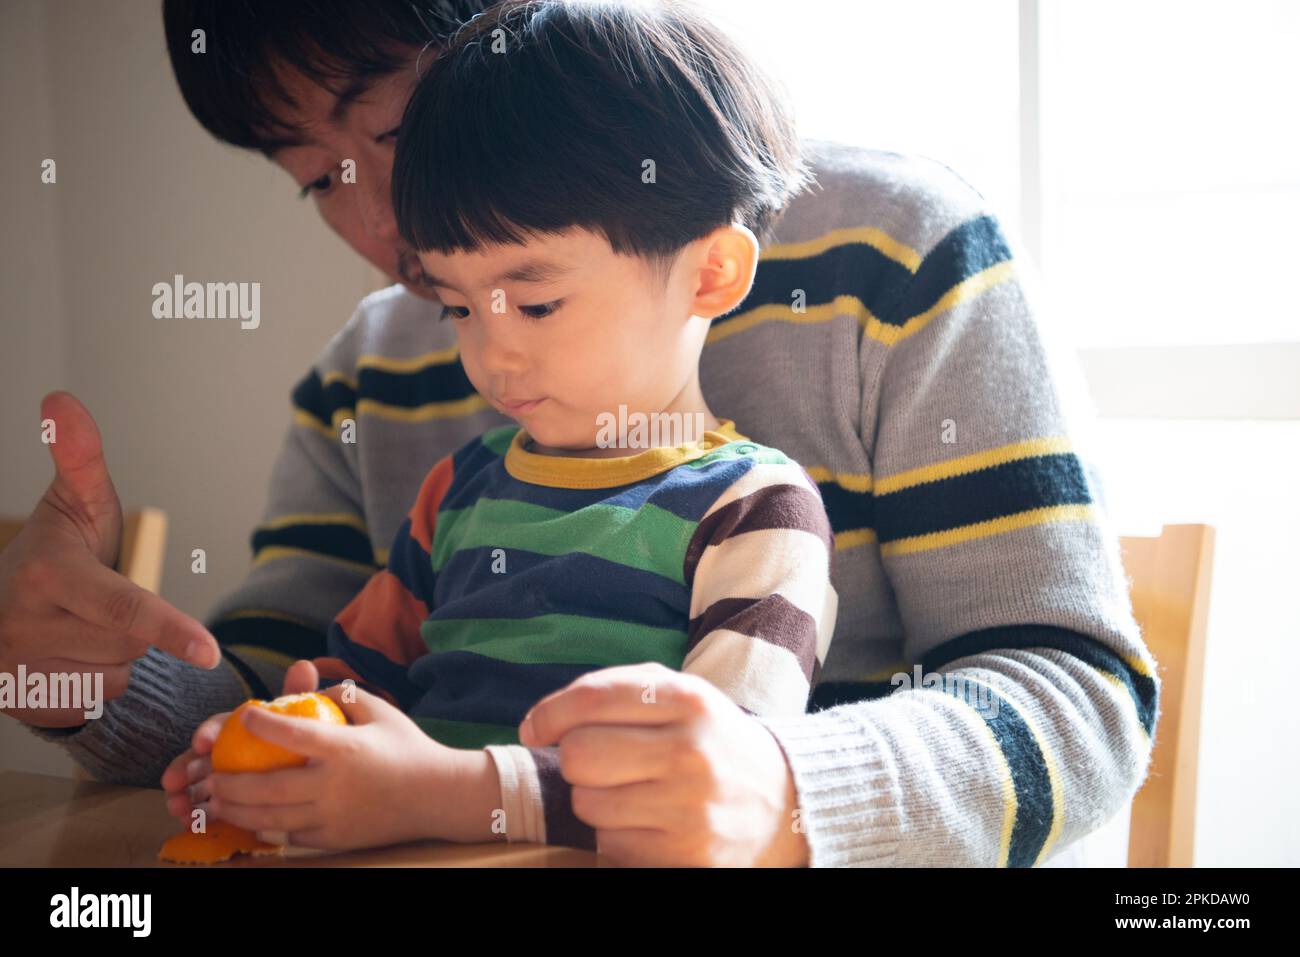 Parent and child peeling oranges Stock Photo